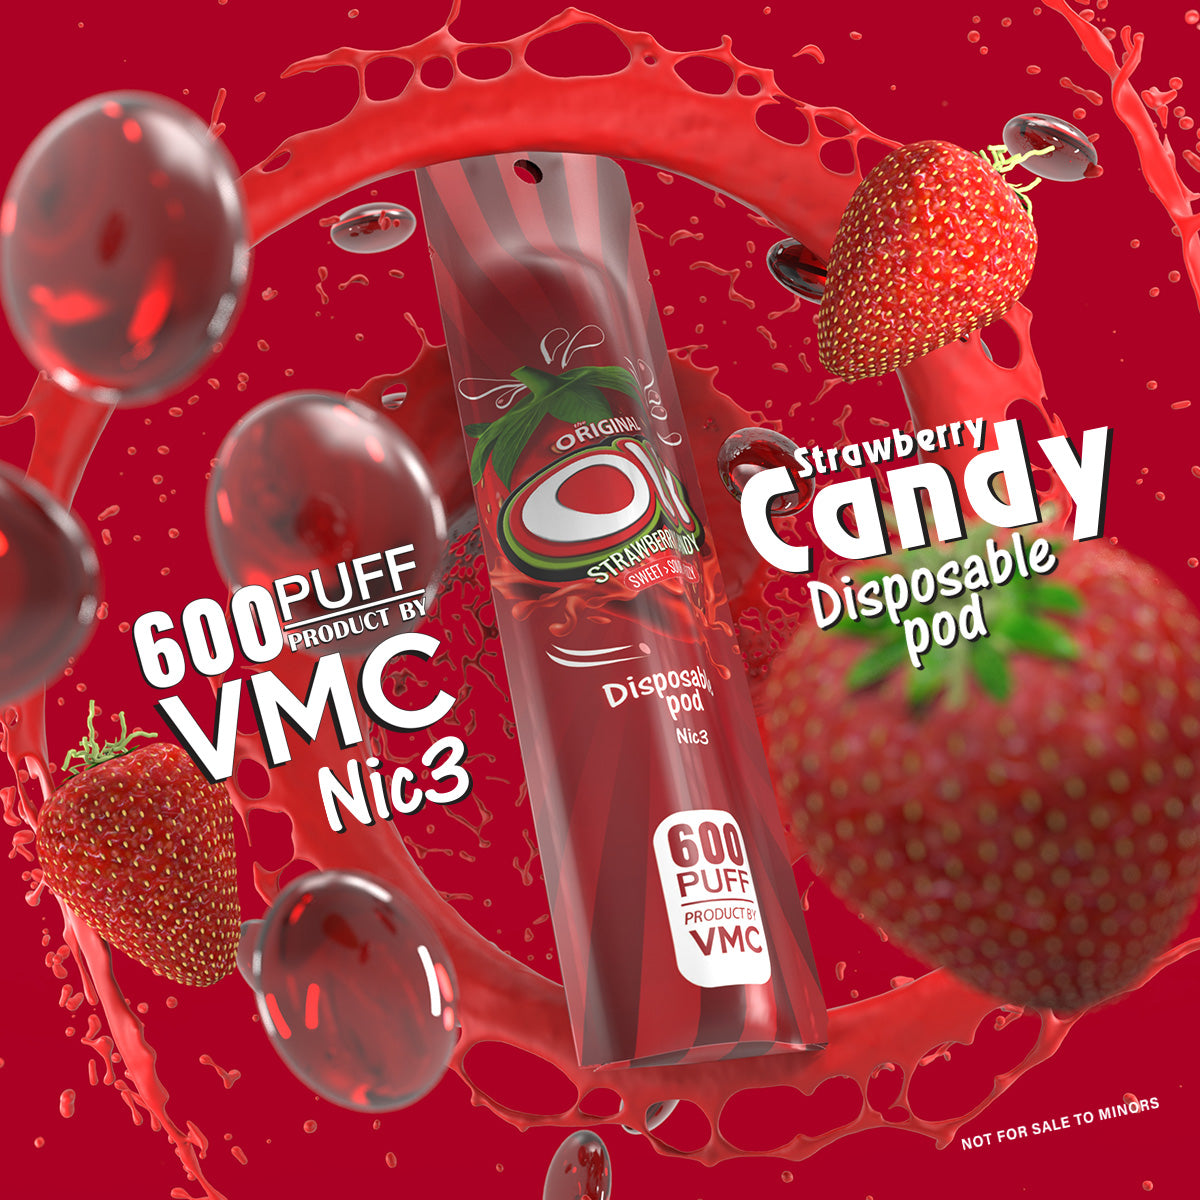 VMC - Strawberry Candy